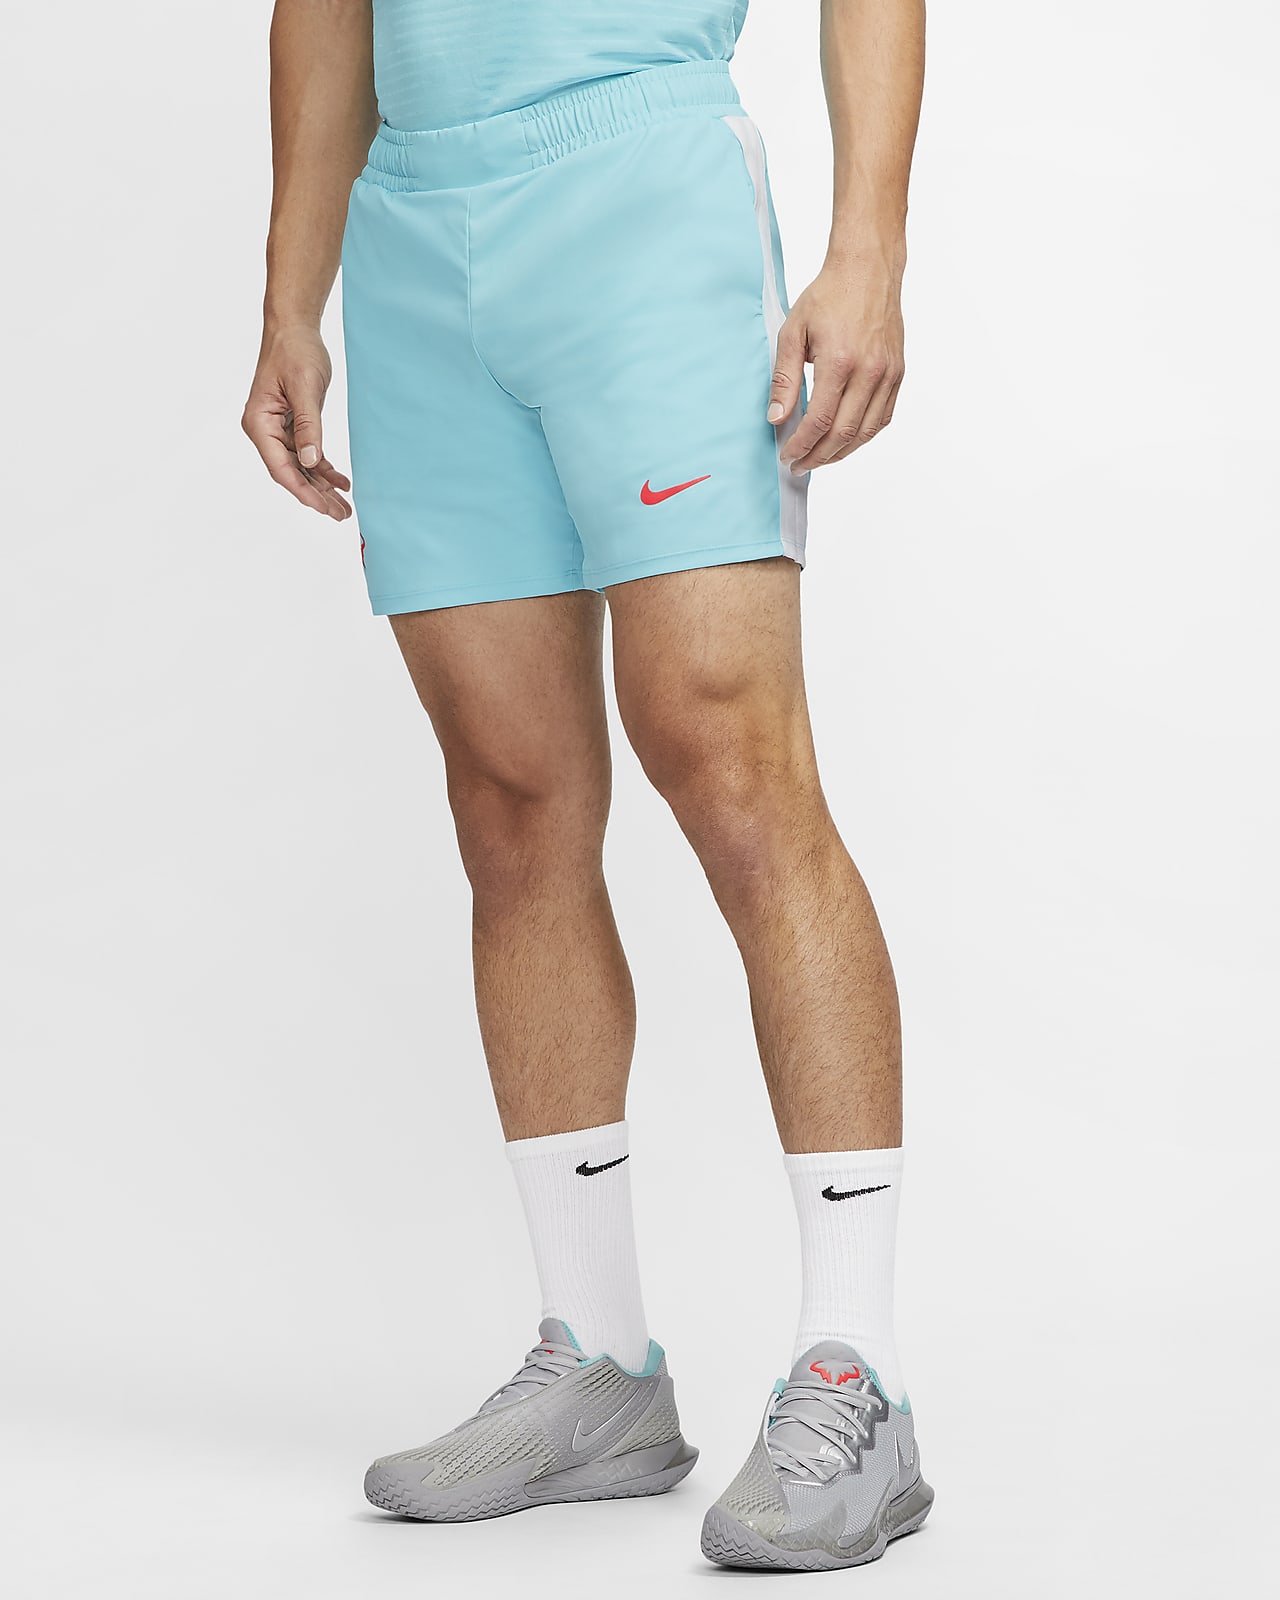 nike tennis wear mens